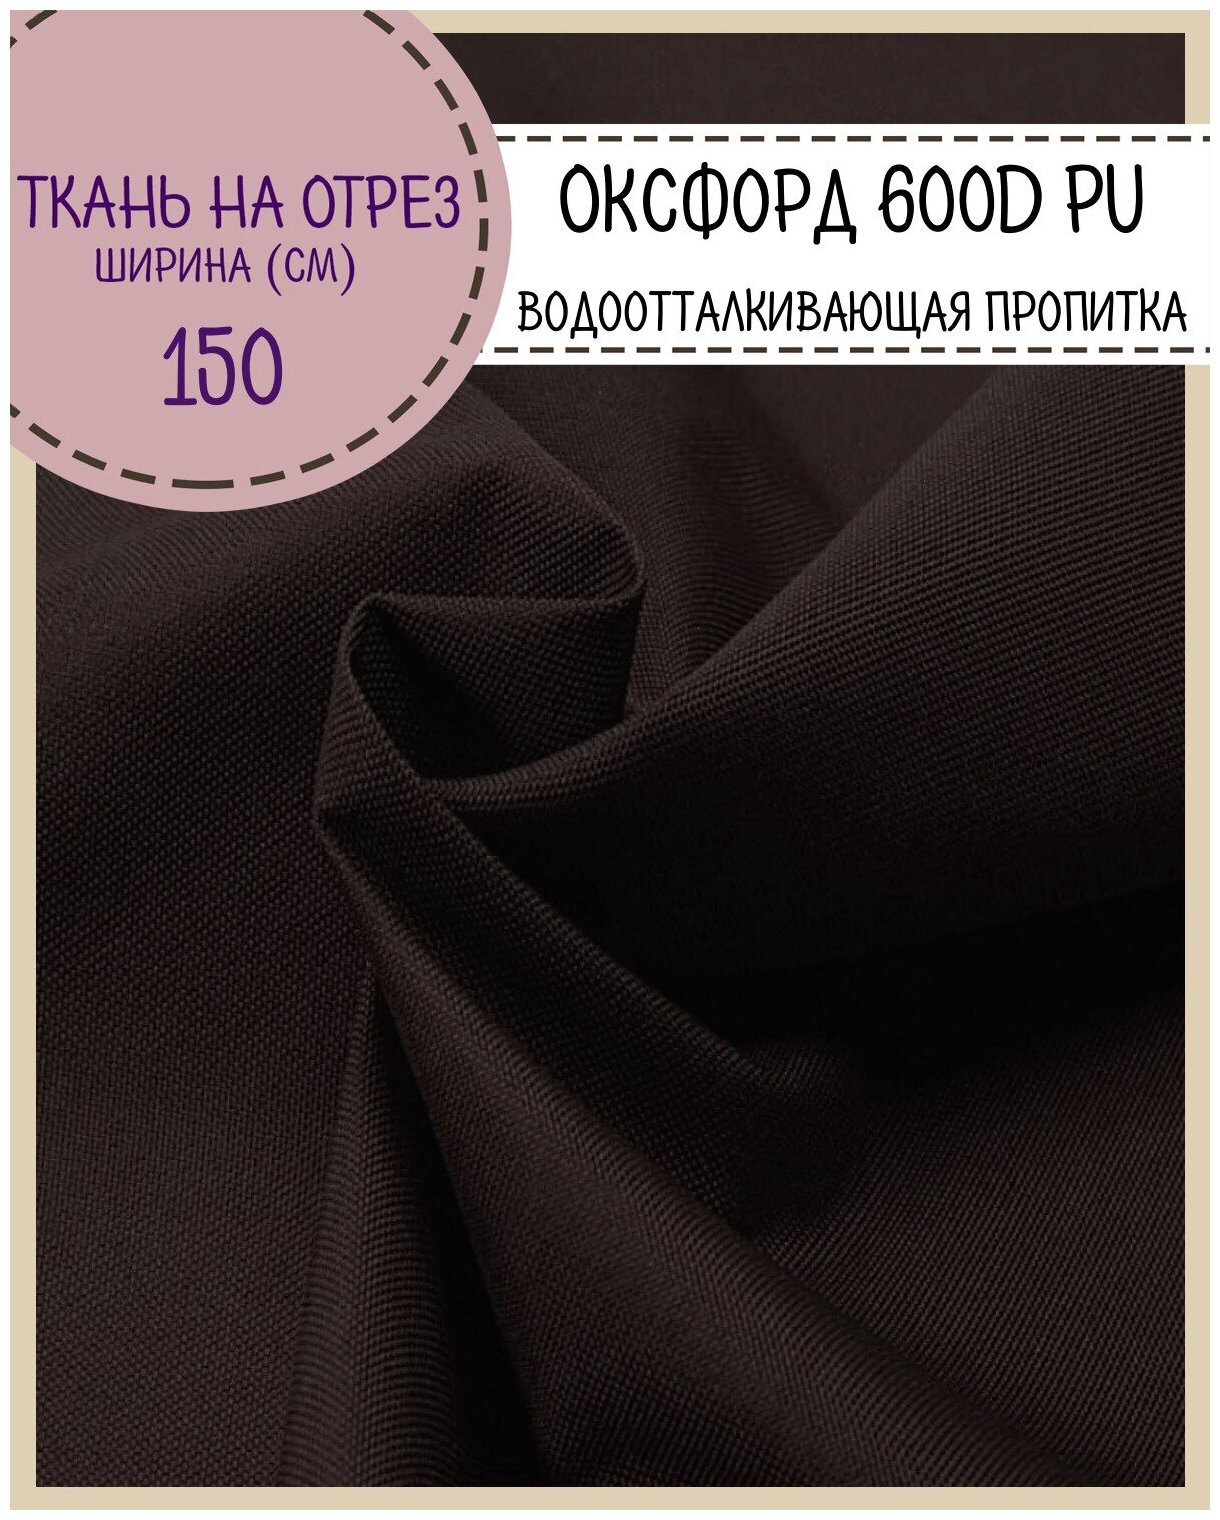 Ткань Оксфорд Oxford 600D PU 1000, пропитка водоотталкивающая, цв. коричневый, ш-150 см, на отрез, цена за пог. метр